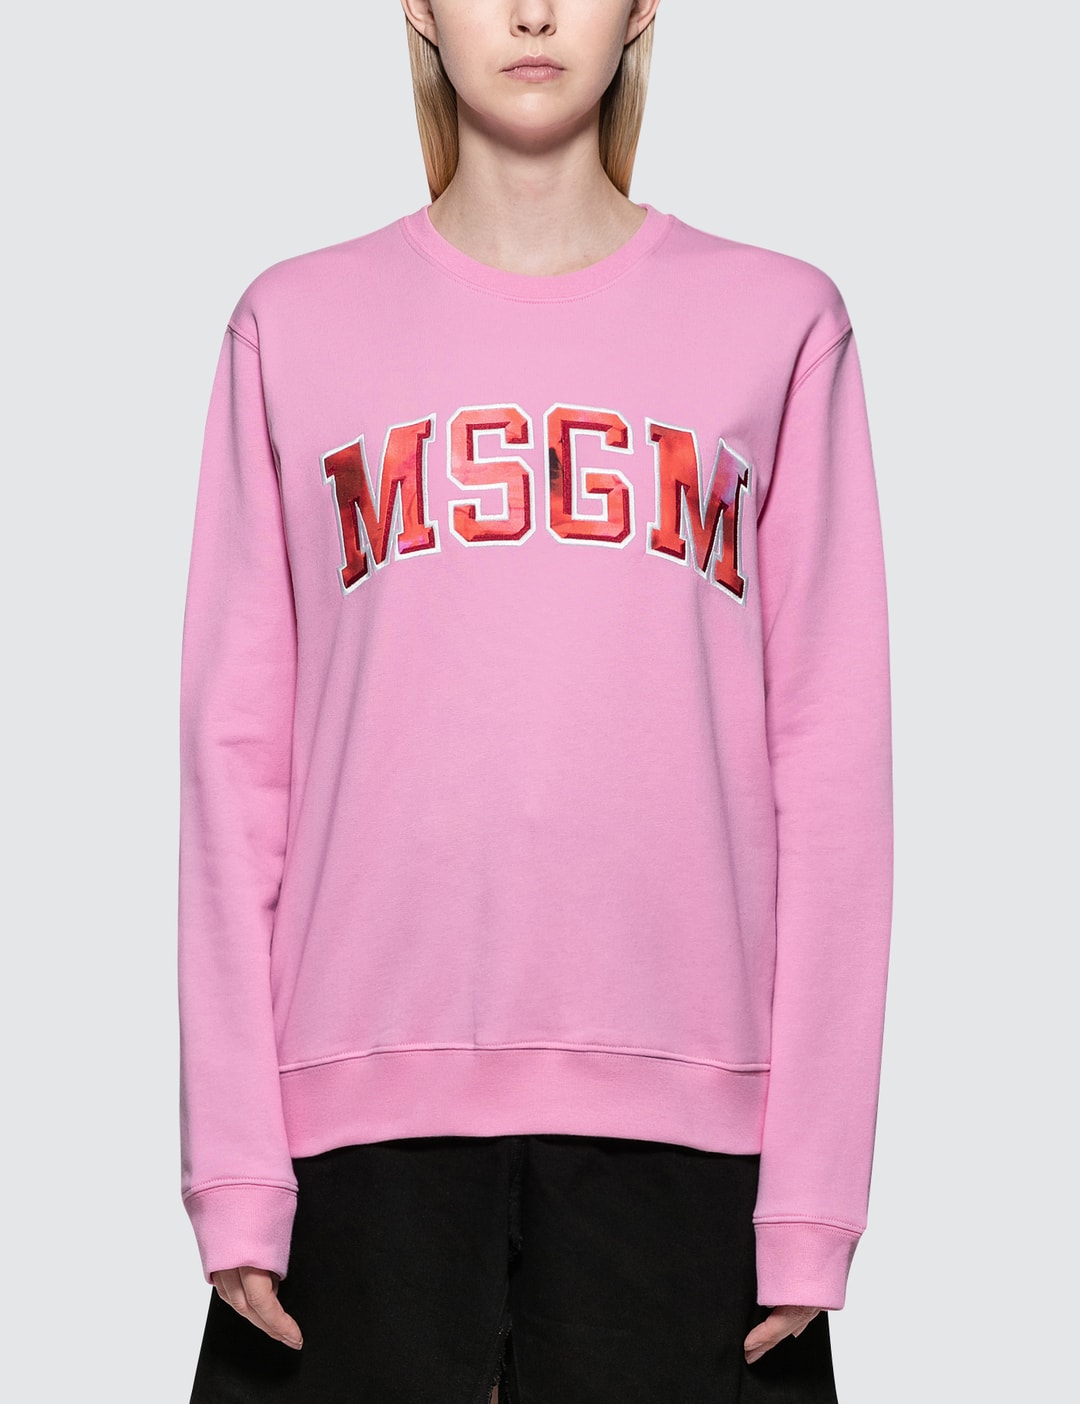 MSGM - Tie-Dye Logo College Sweatshirt | HBX - Globally Curated Fashion ...